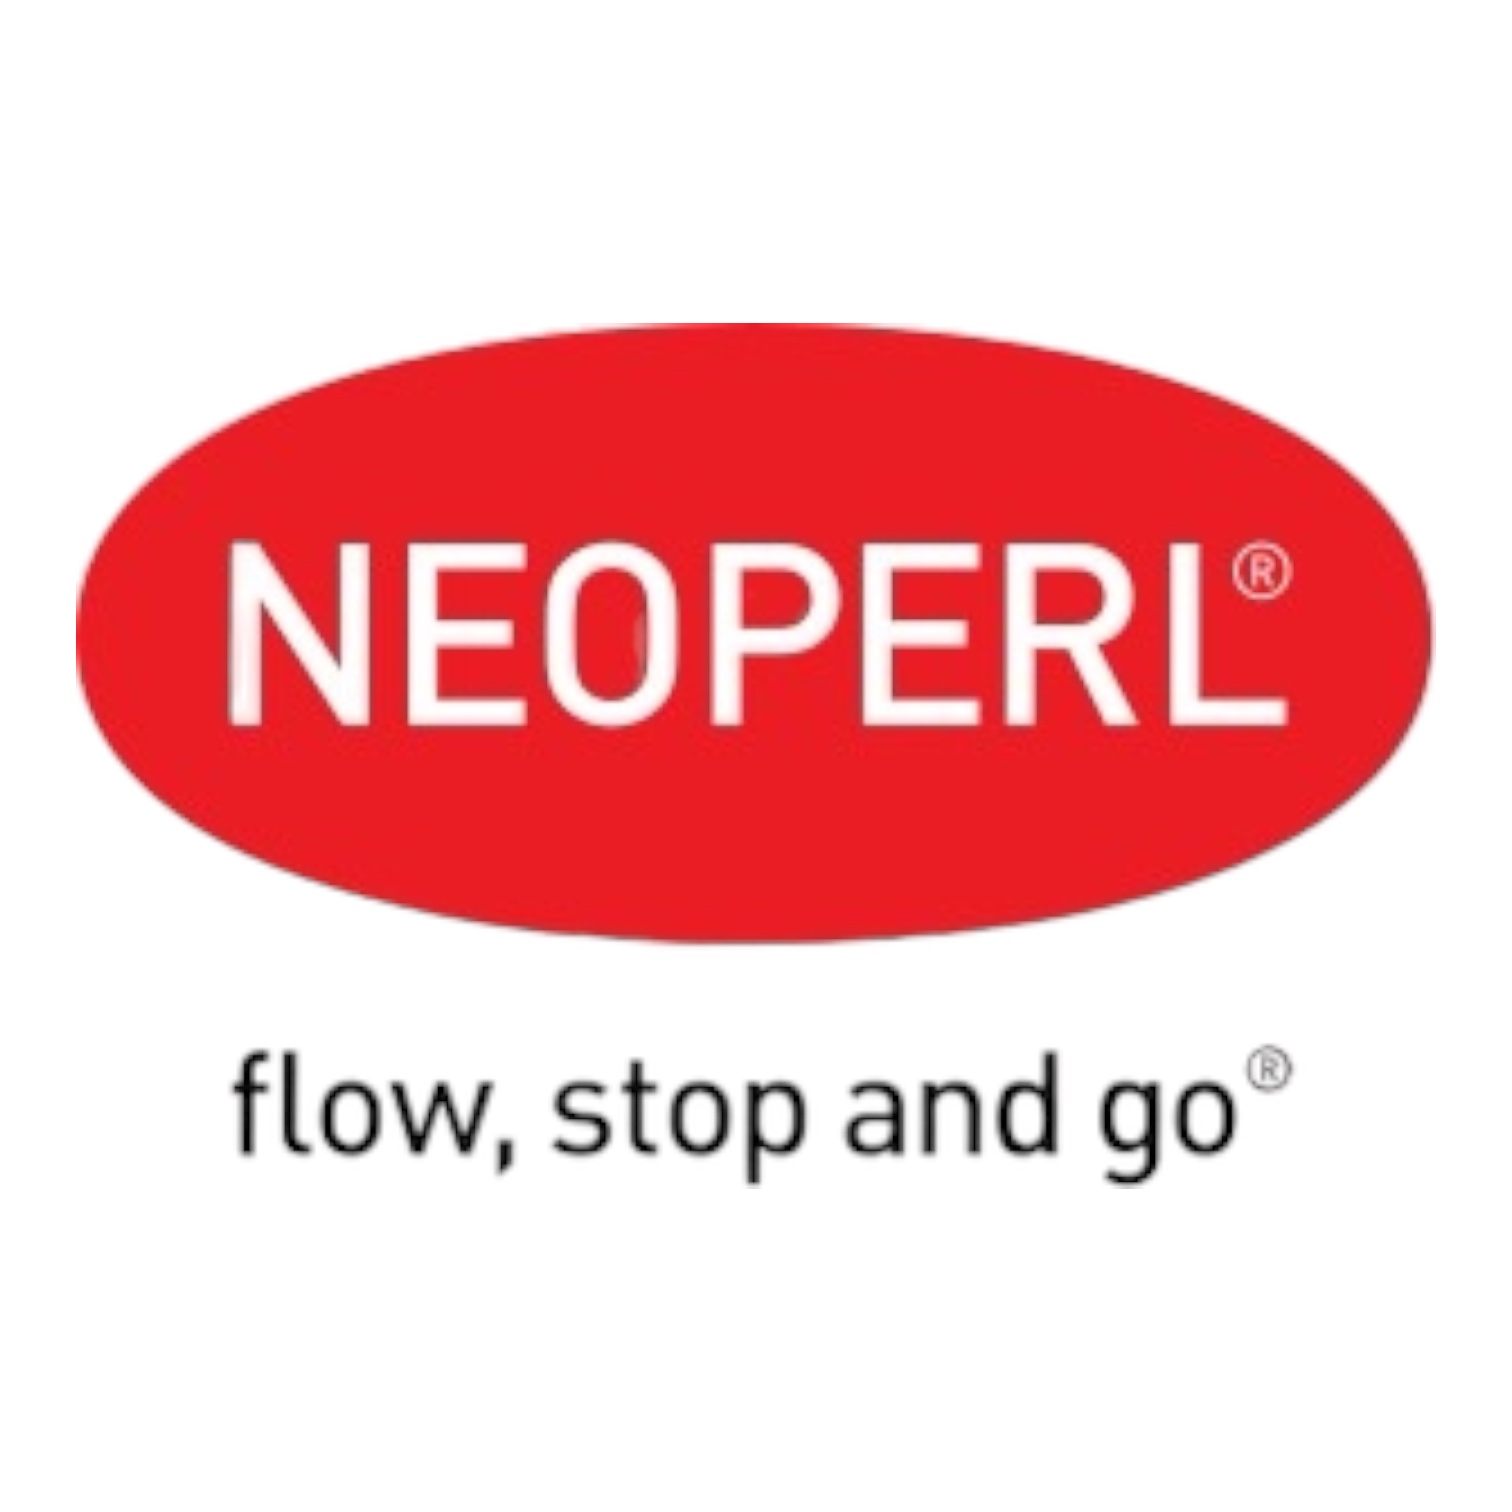 Neoperl